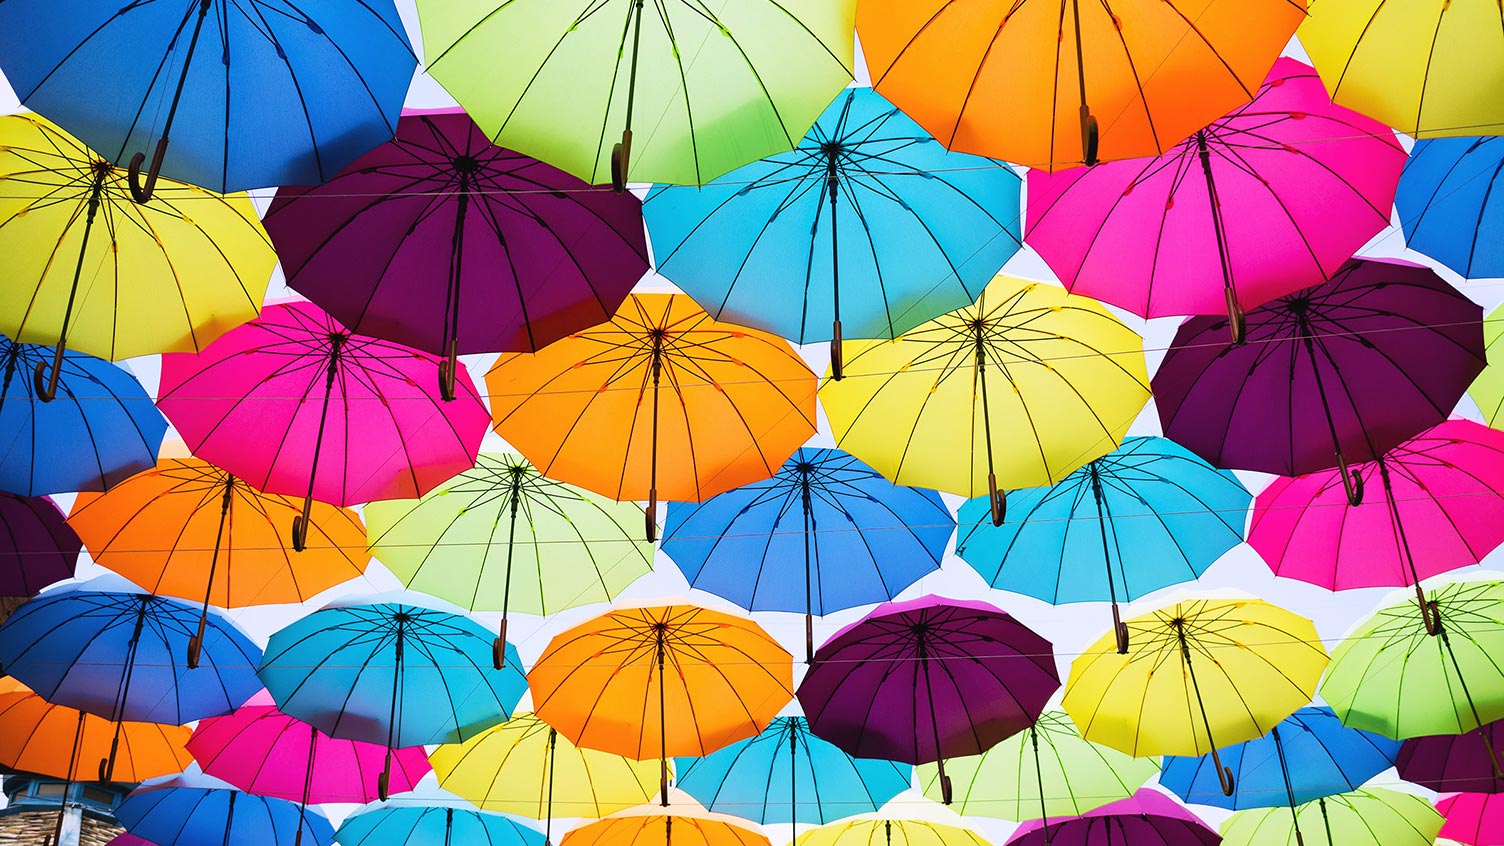 Bild von Regenschirmen